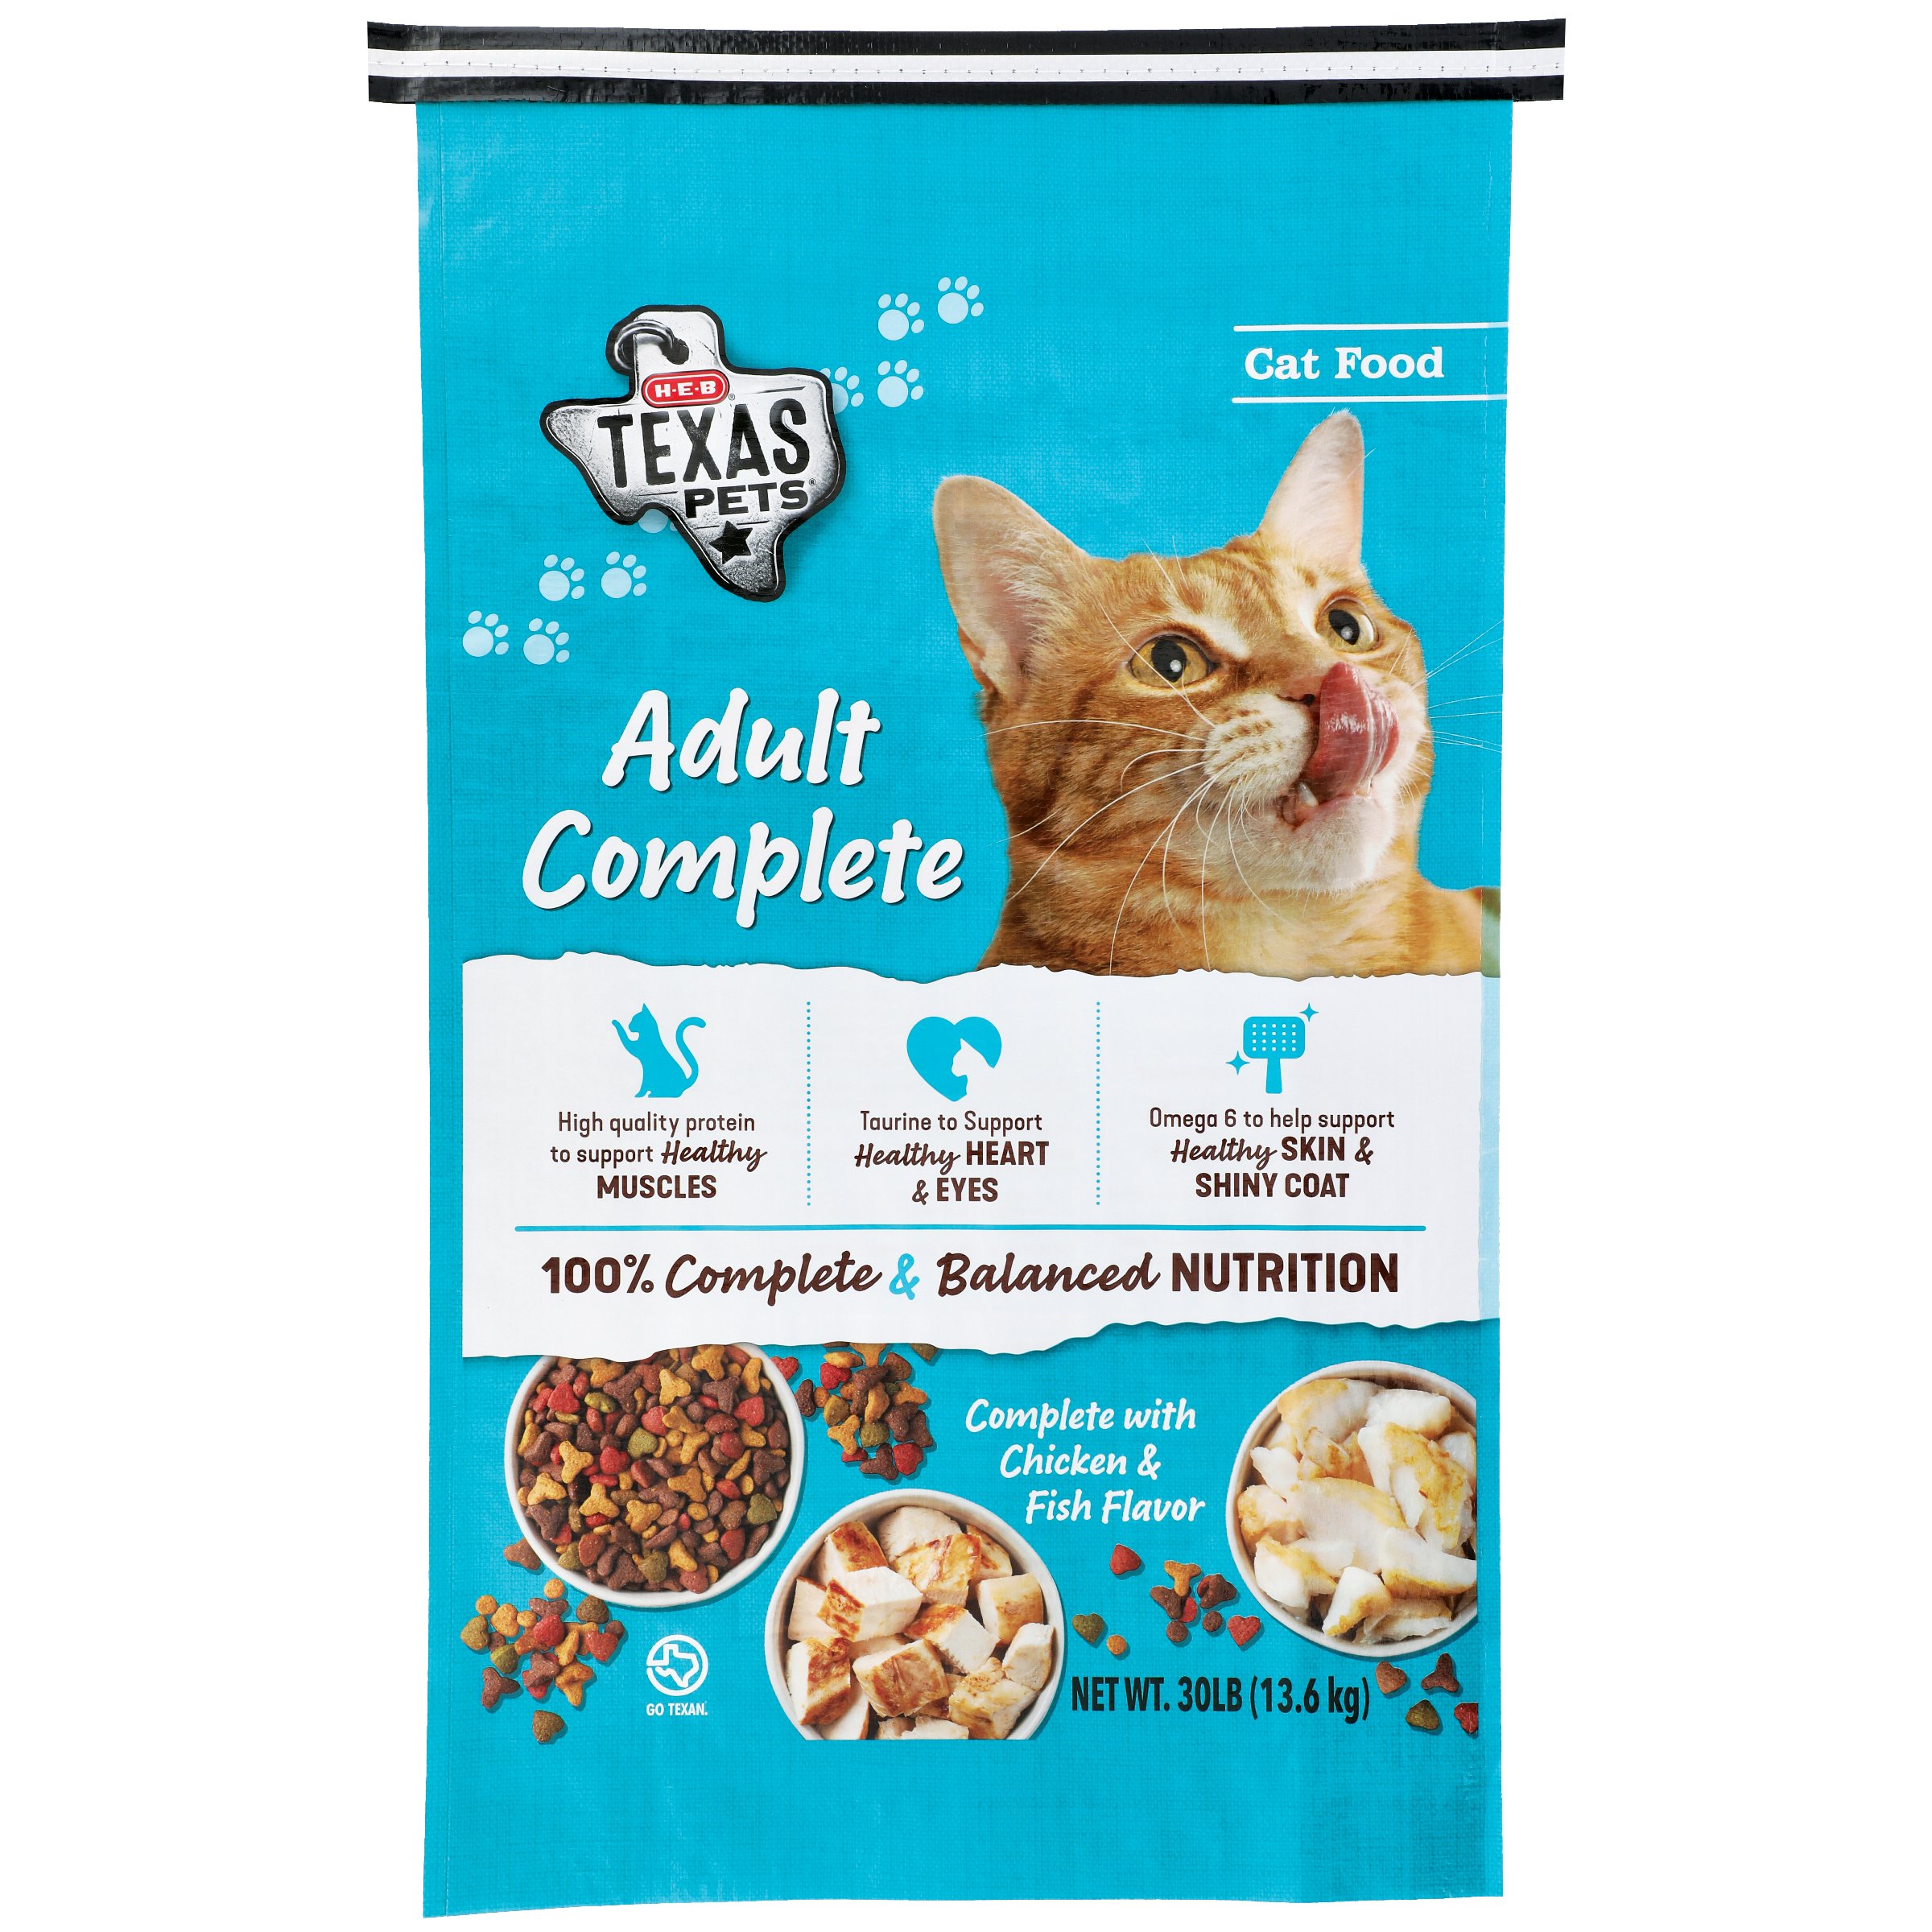 HEB Texas Pets Adult Complete Formula Dry Cat Food Shop Cats at HEB